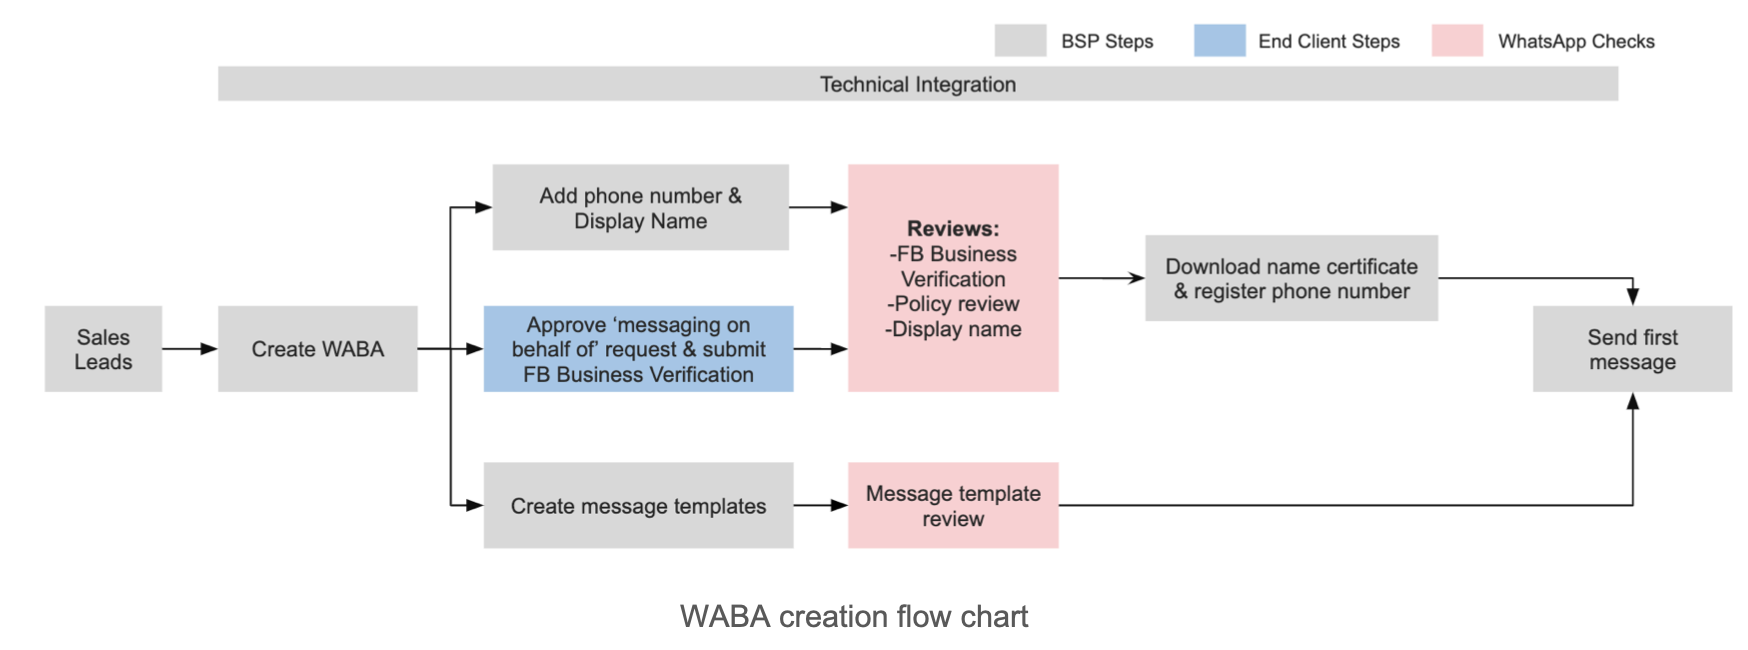 WATI - WhatsApp Team Inbox - API WhatsApp - CRM WhatsApp - Processo Aprovação APIs do WABA